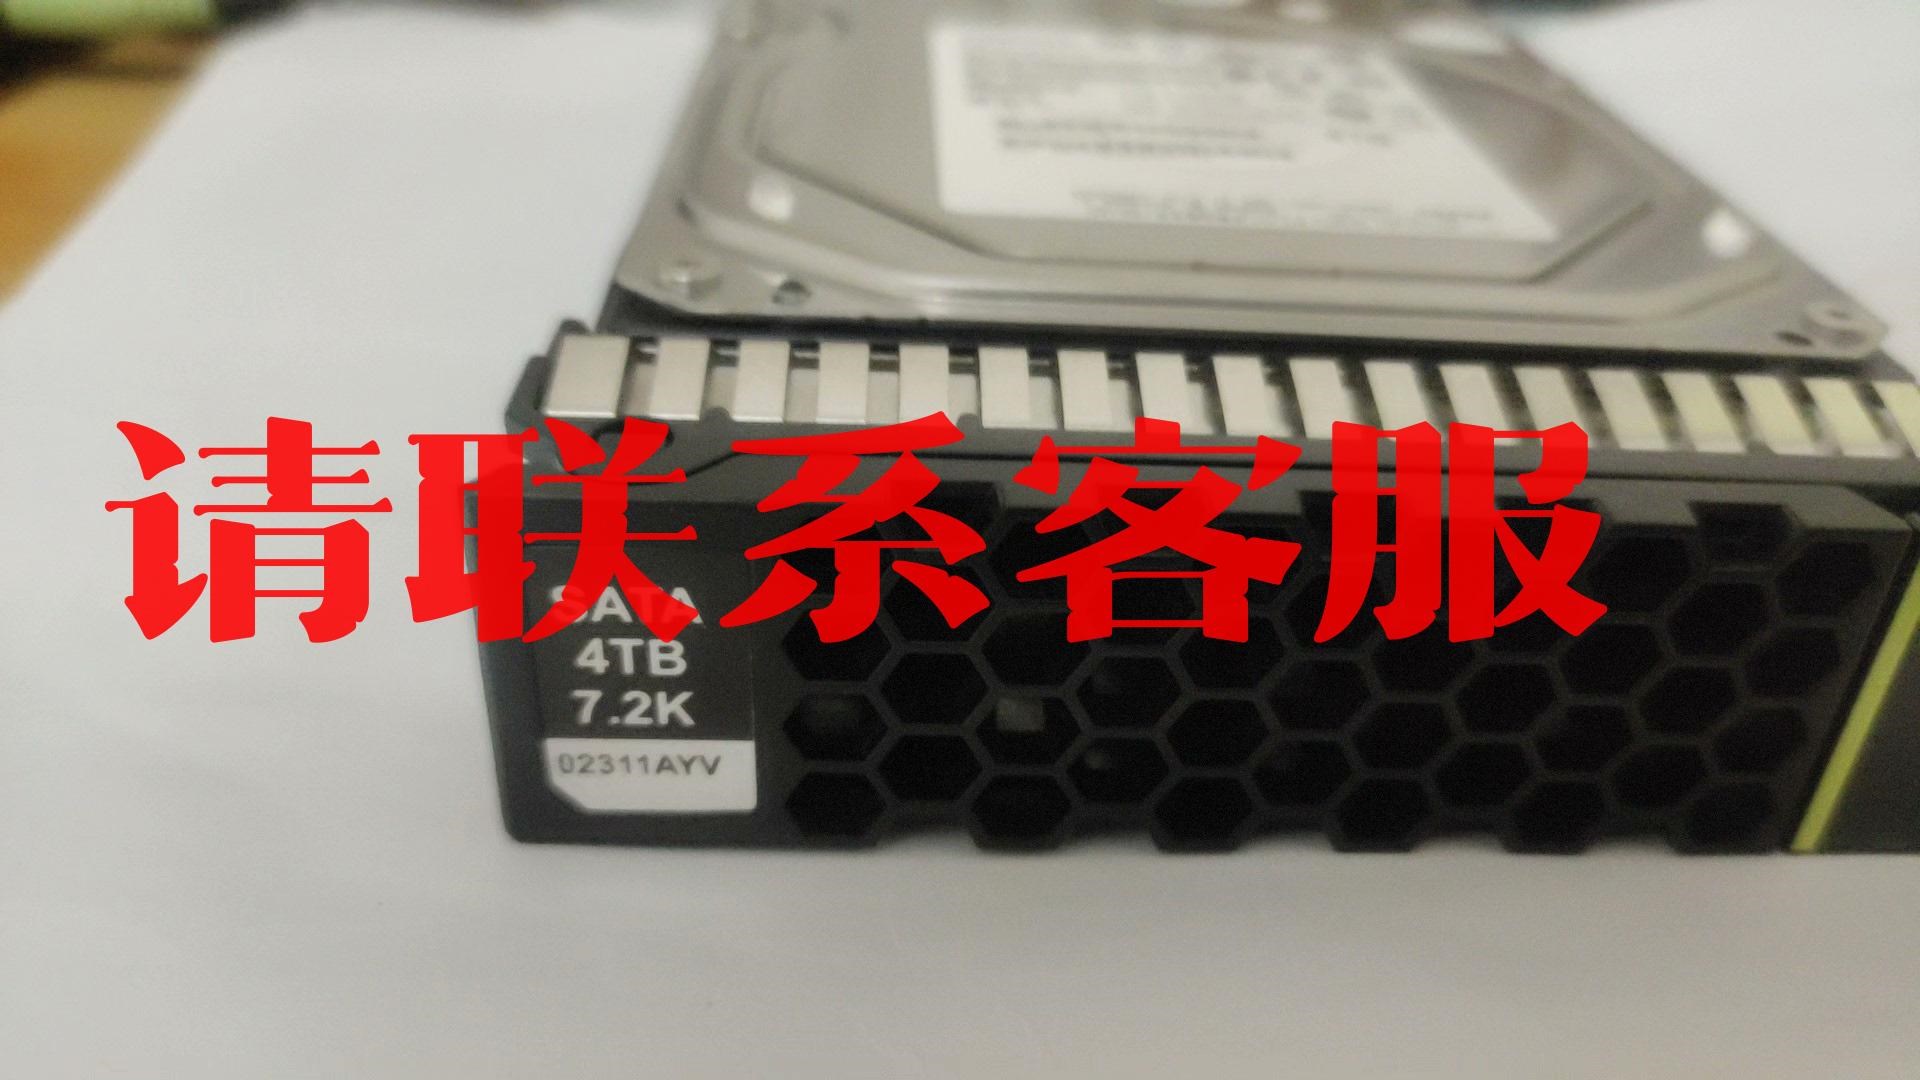 议价:Huawei/原装 02311AYV 4TB SATA 7.